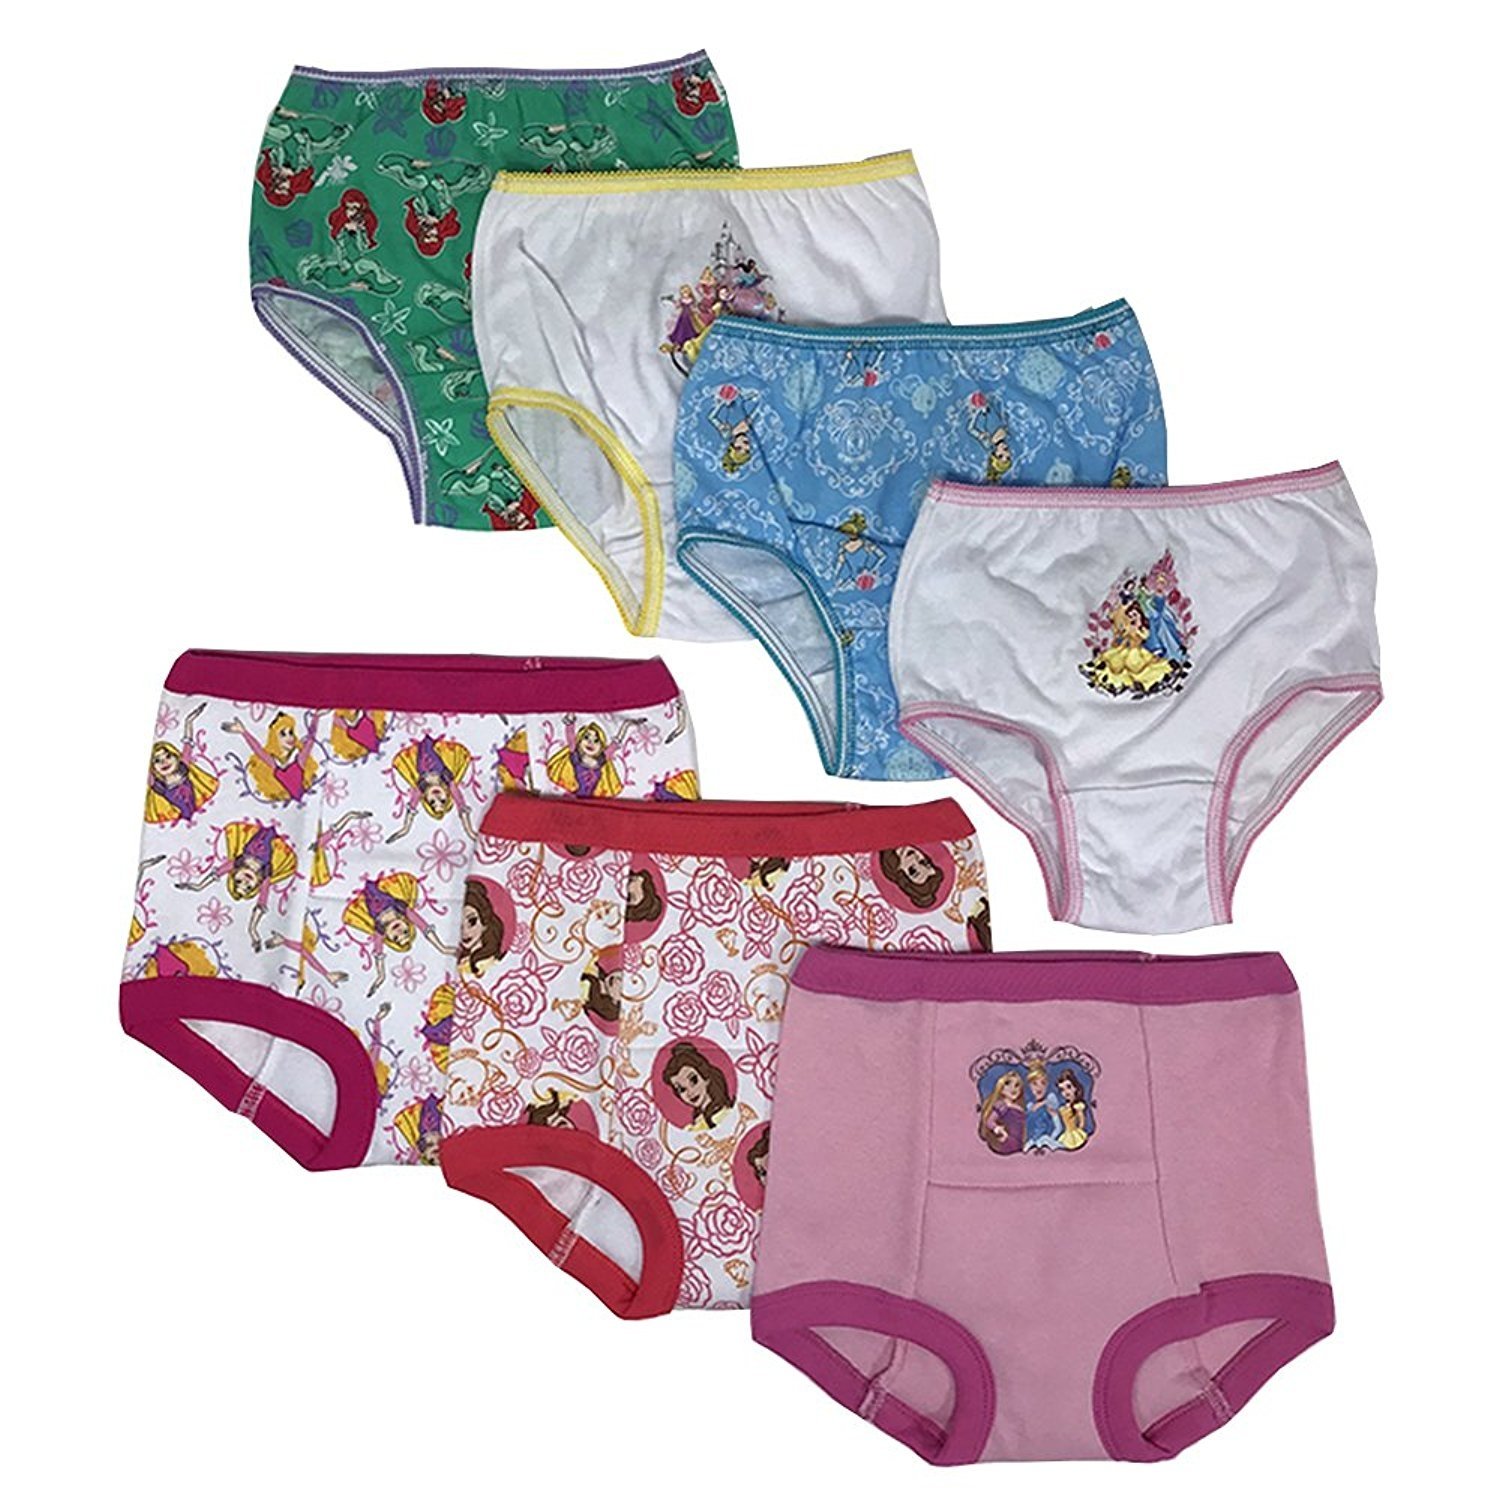 Buy Disney Girls' Toddler Princess Potty Training Pants Multipack